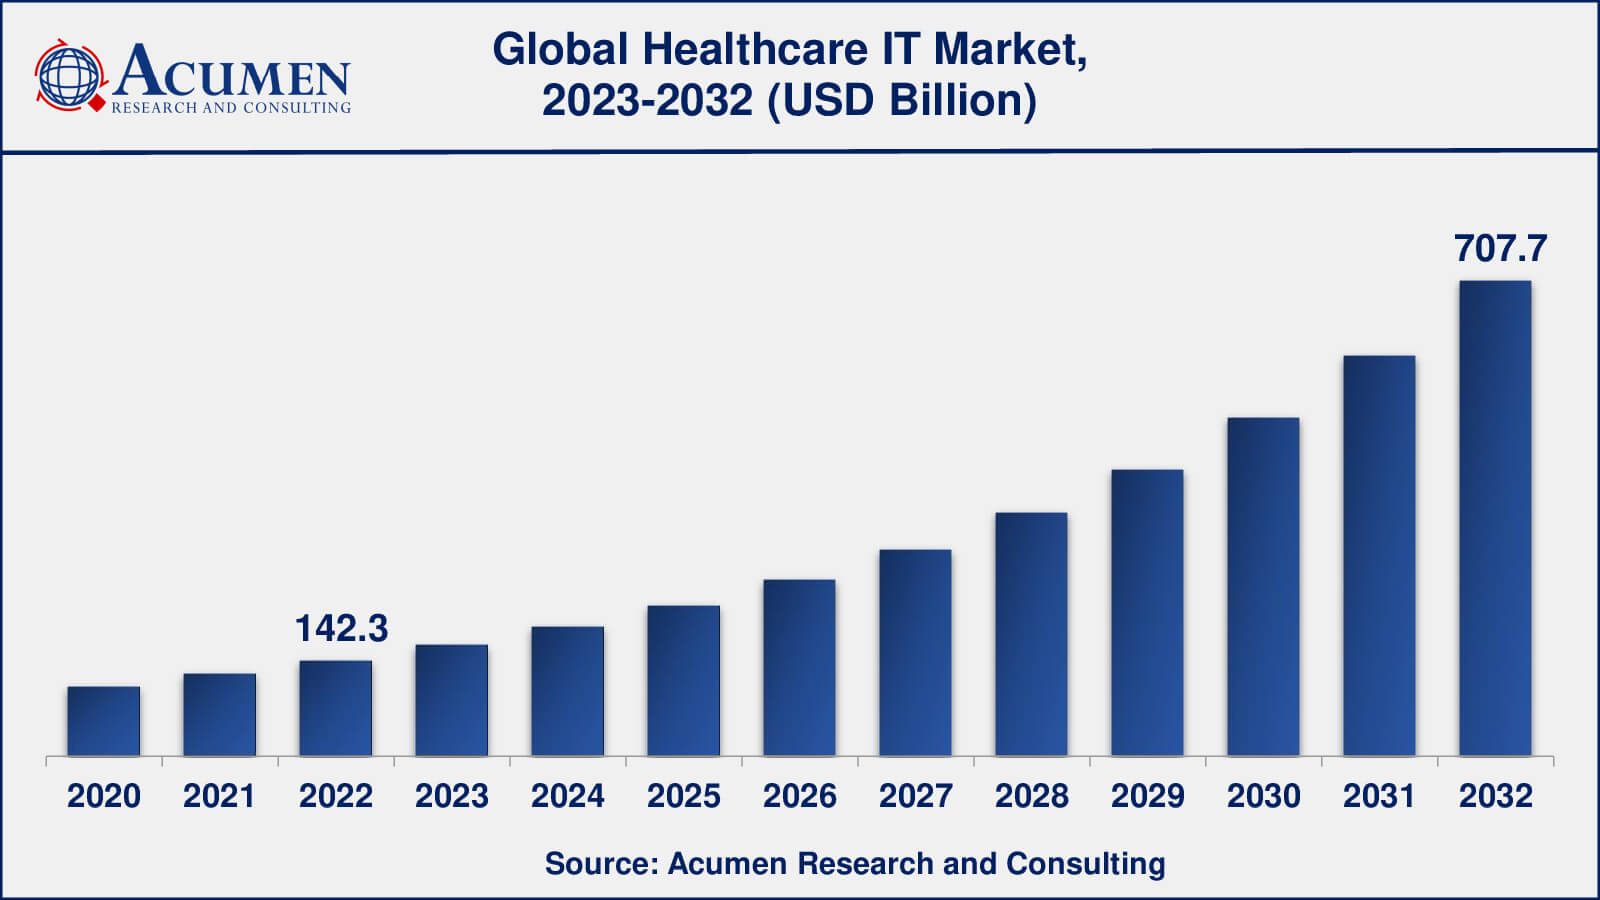 Global Healthcare IT Market Dynamics